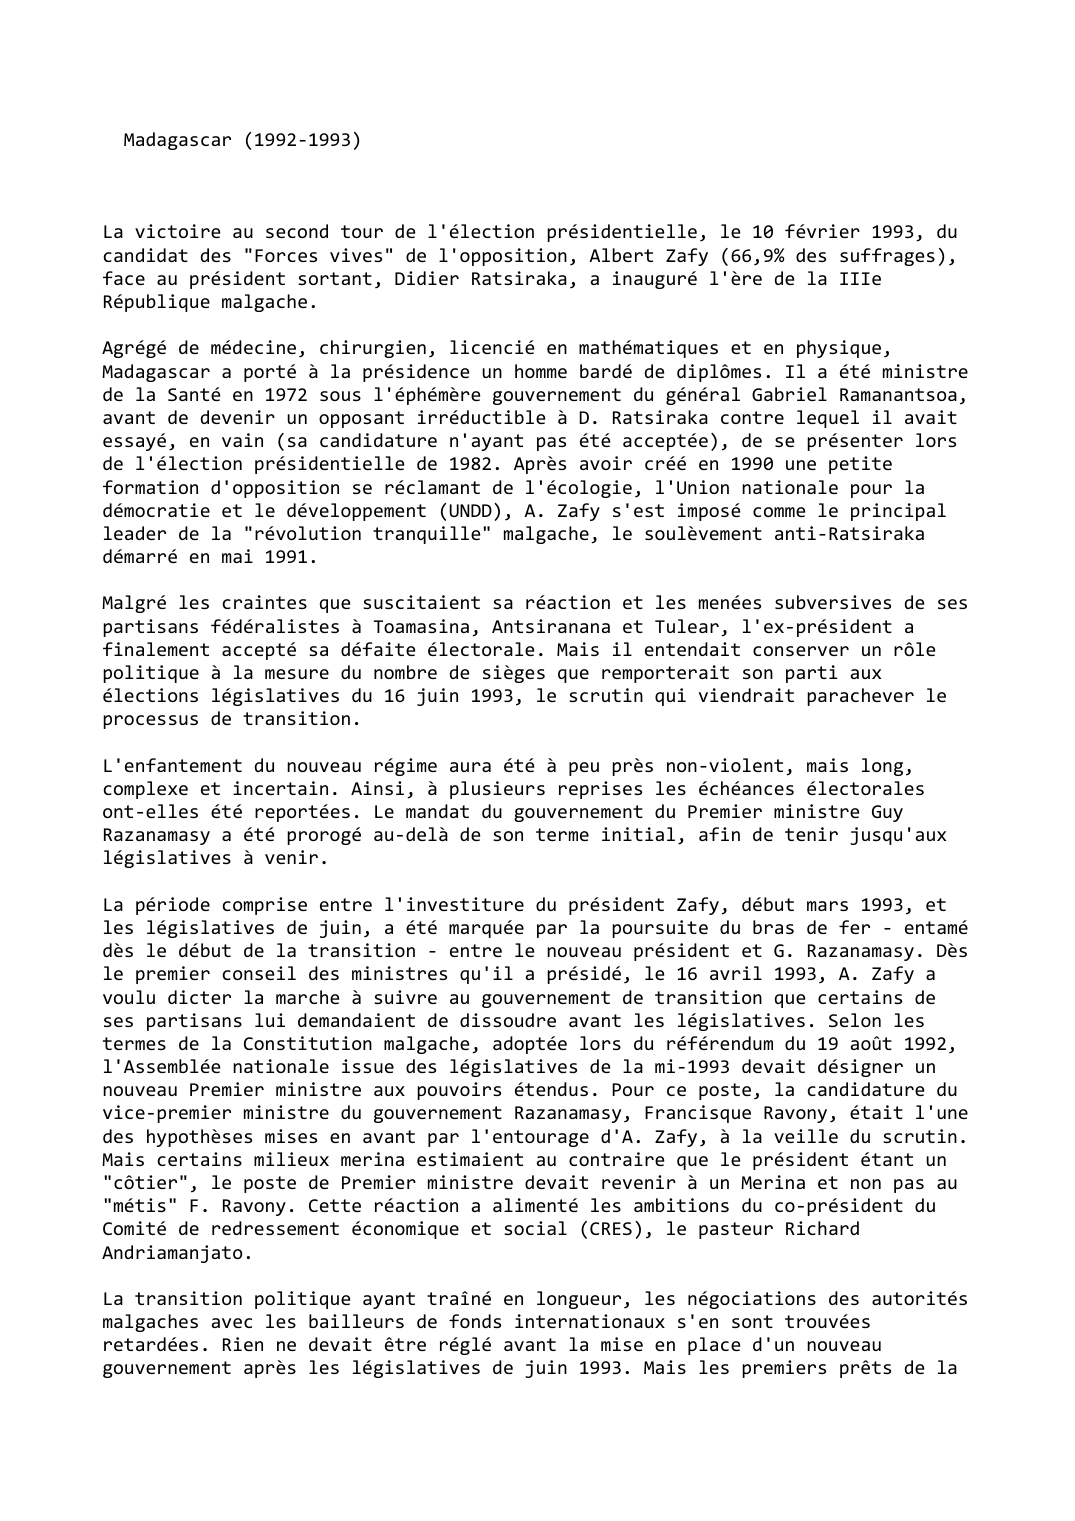 Prévisualisation du document Madagascar (1992-1993)